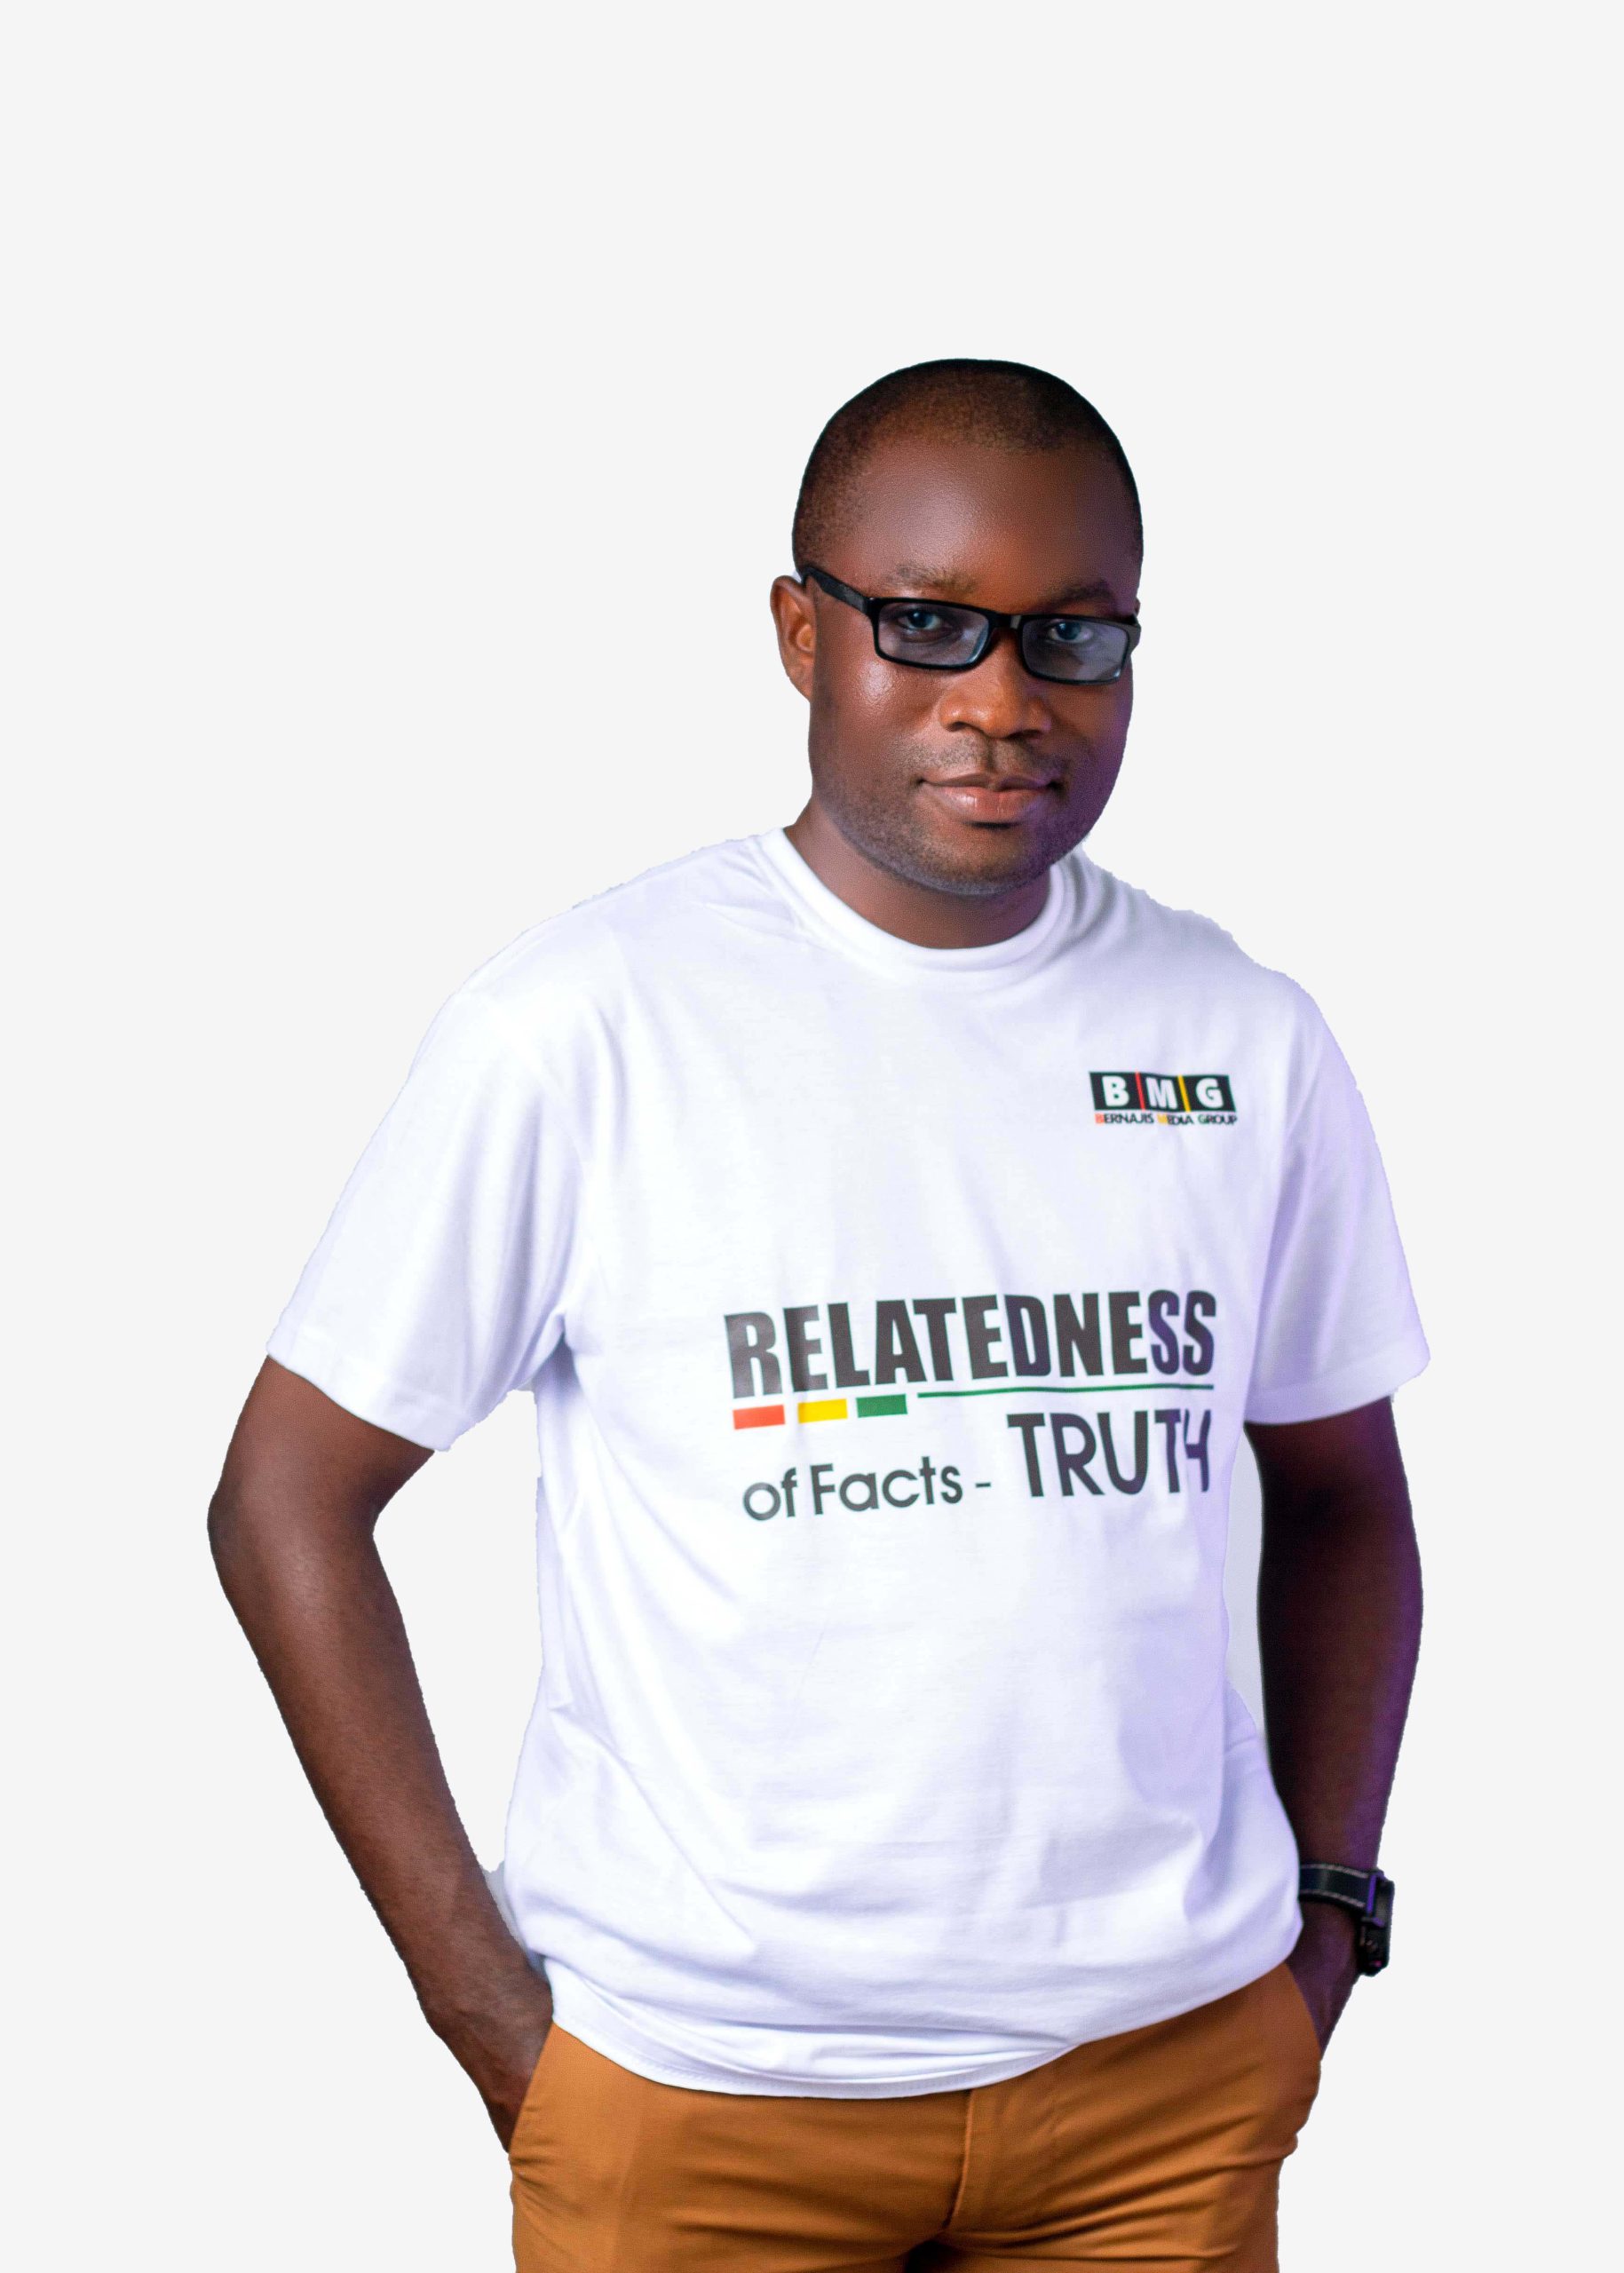 Bernard Agbonoshie (Bernajis), founder of Bernajis Media Group (bernajismedia.com)